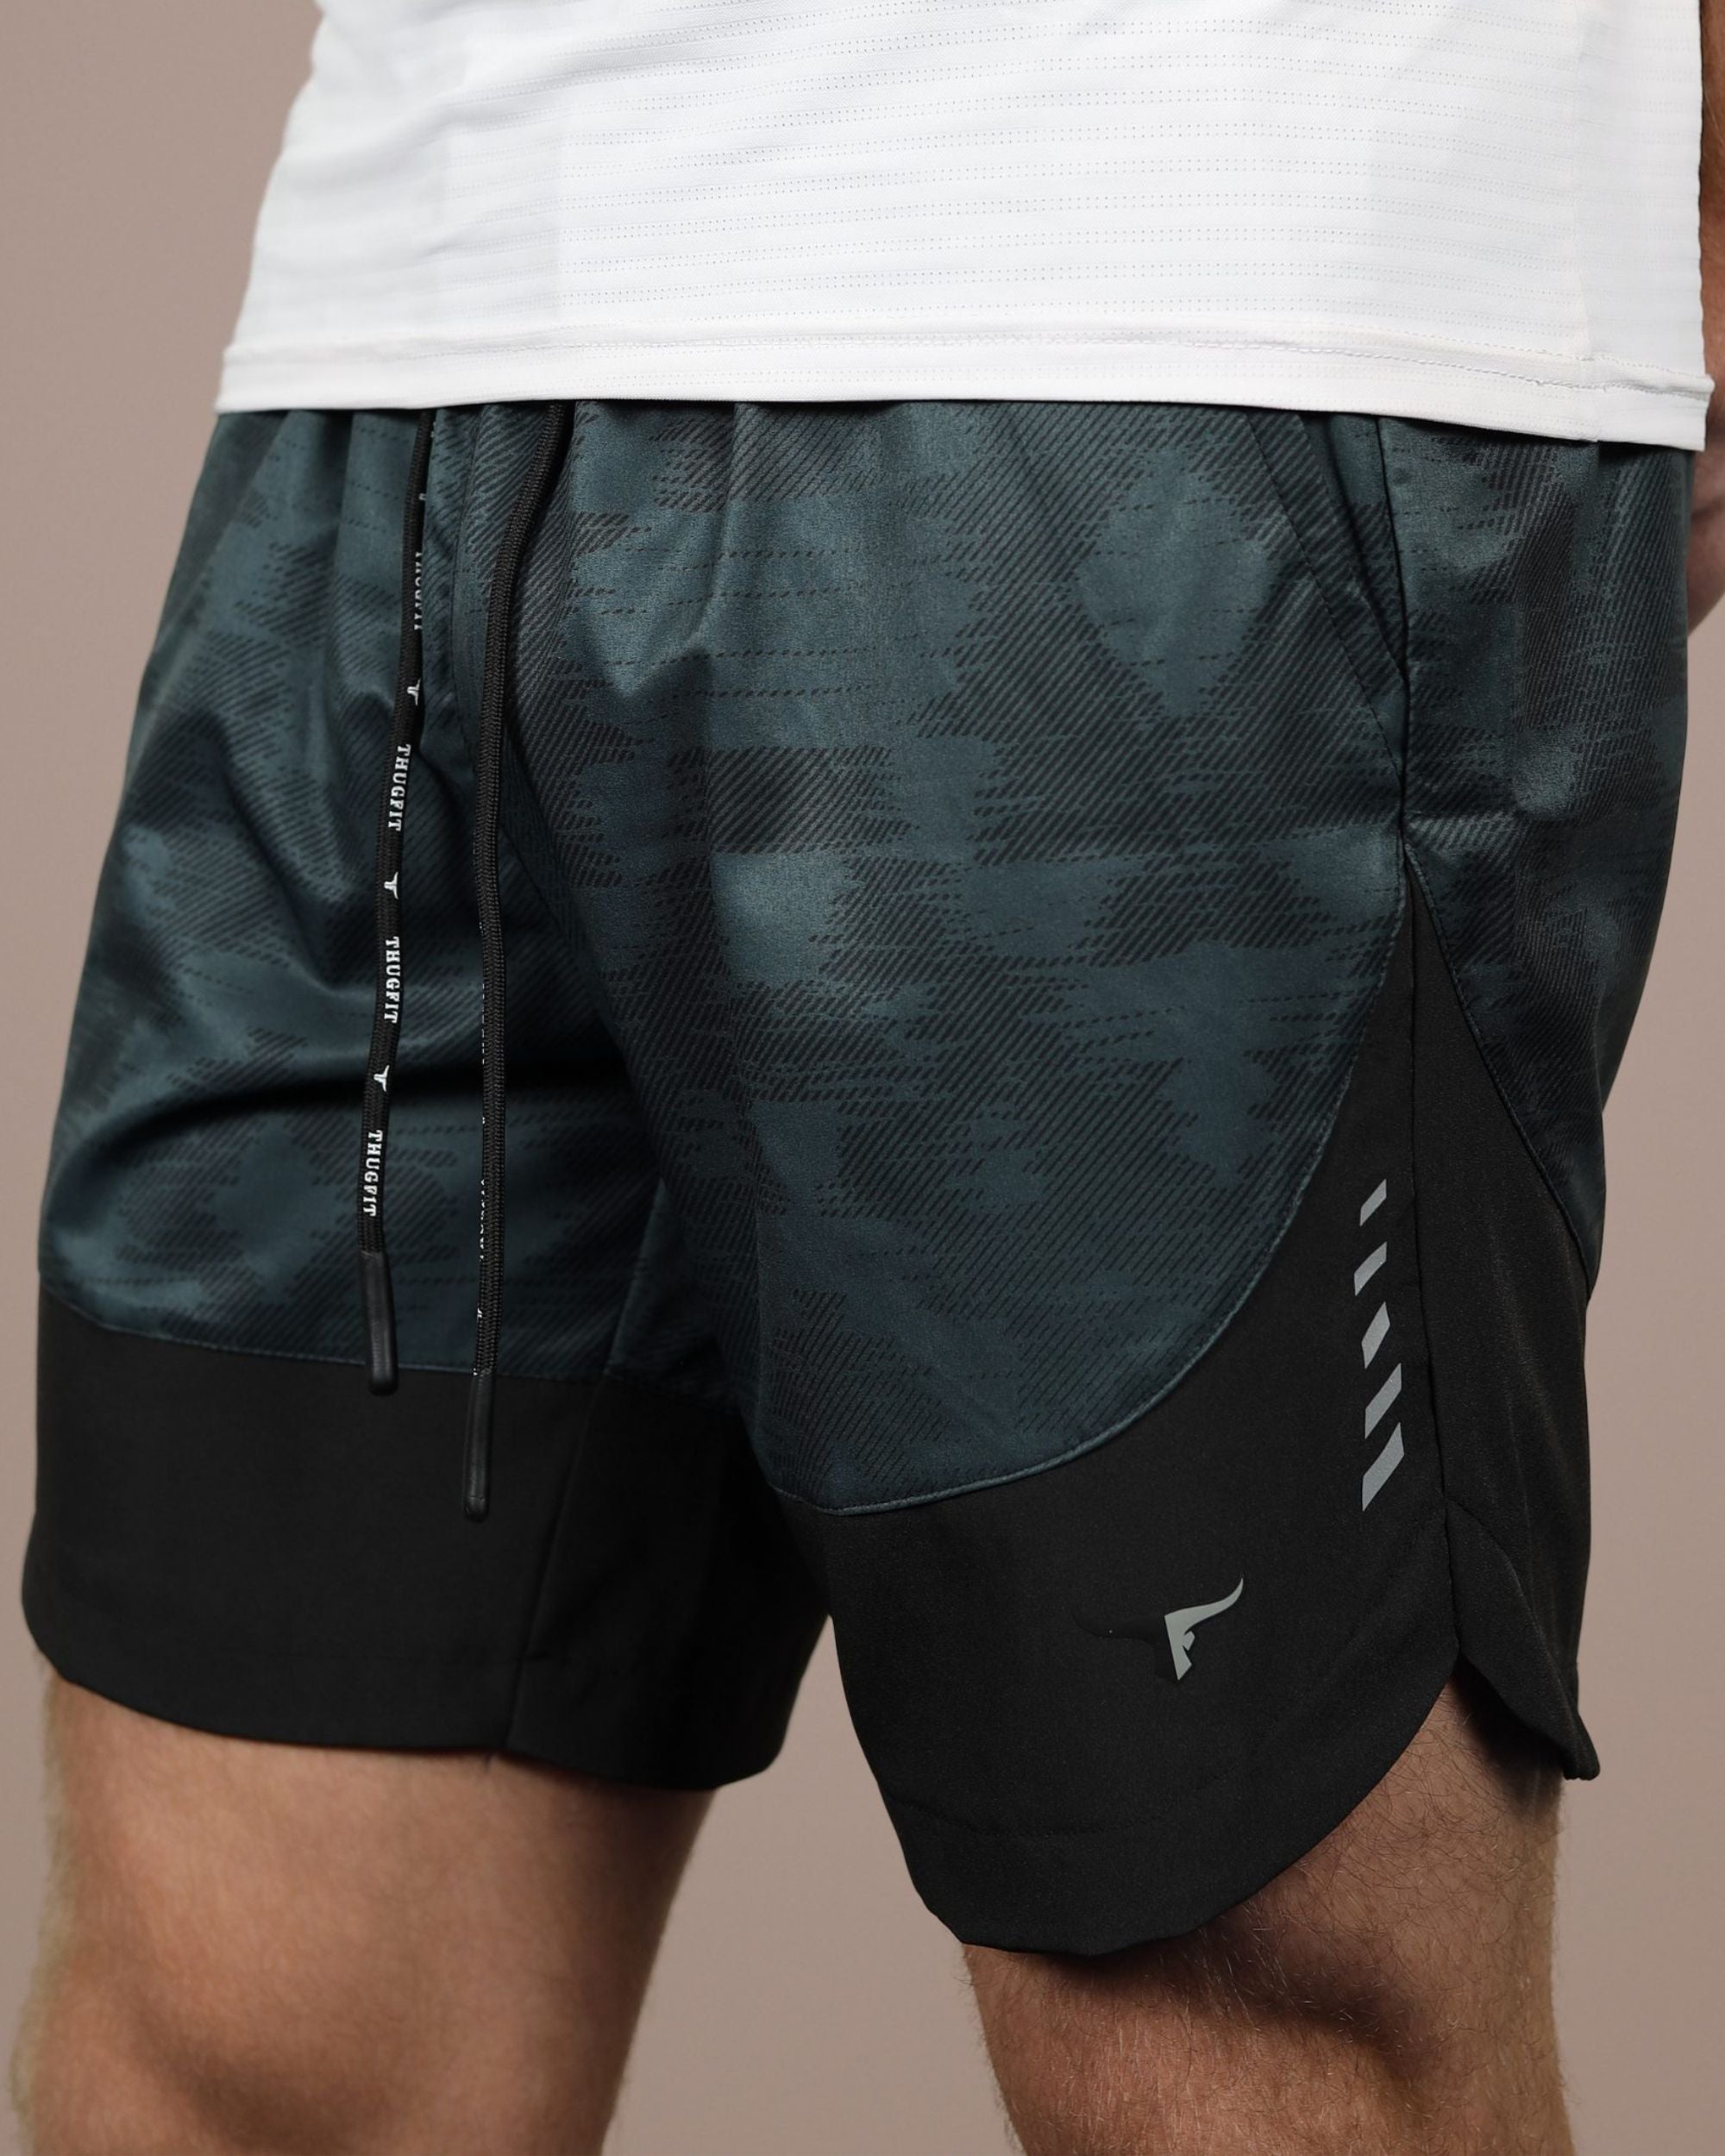 THUGFIT Fitflex Men's Shorts (7" Inseam)- Green - THUGFIT